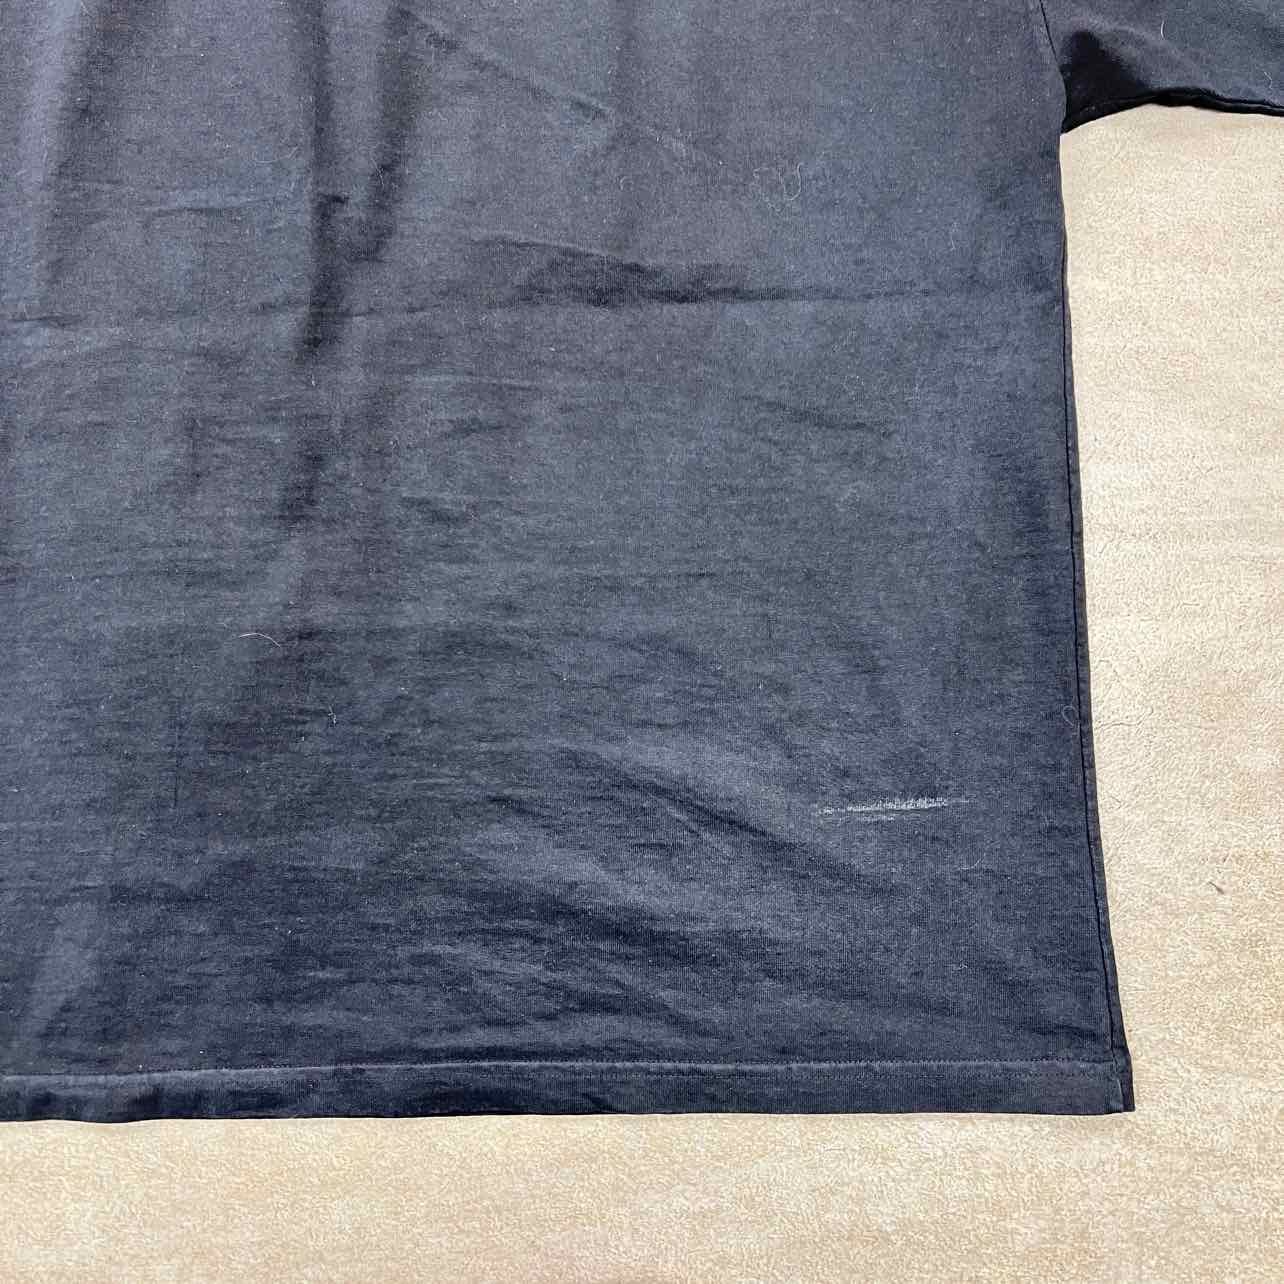 Rhude T-Shirt "CASINO" Black Used Size XL